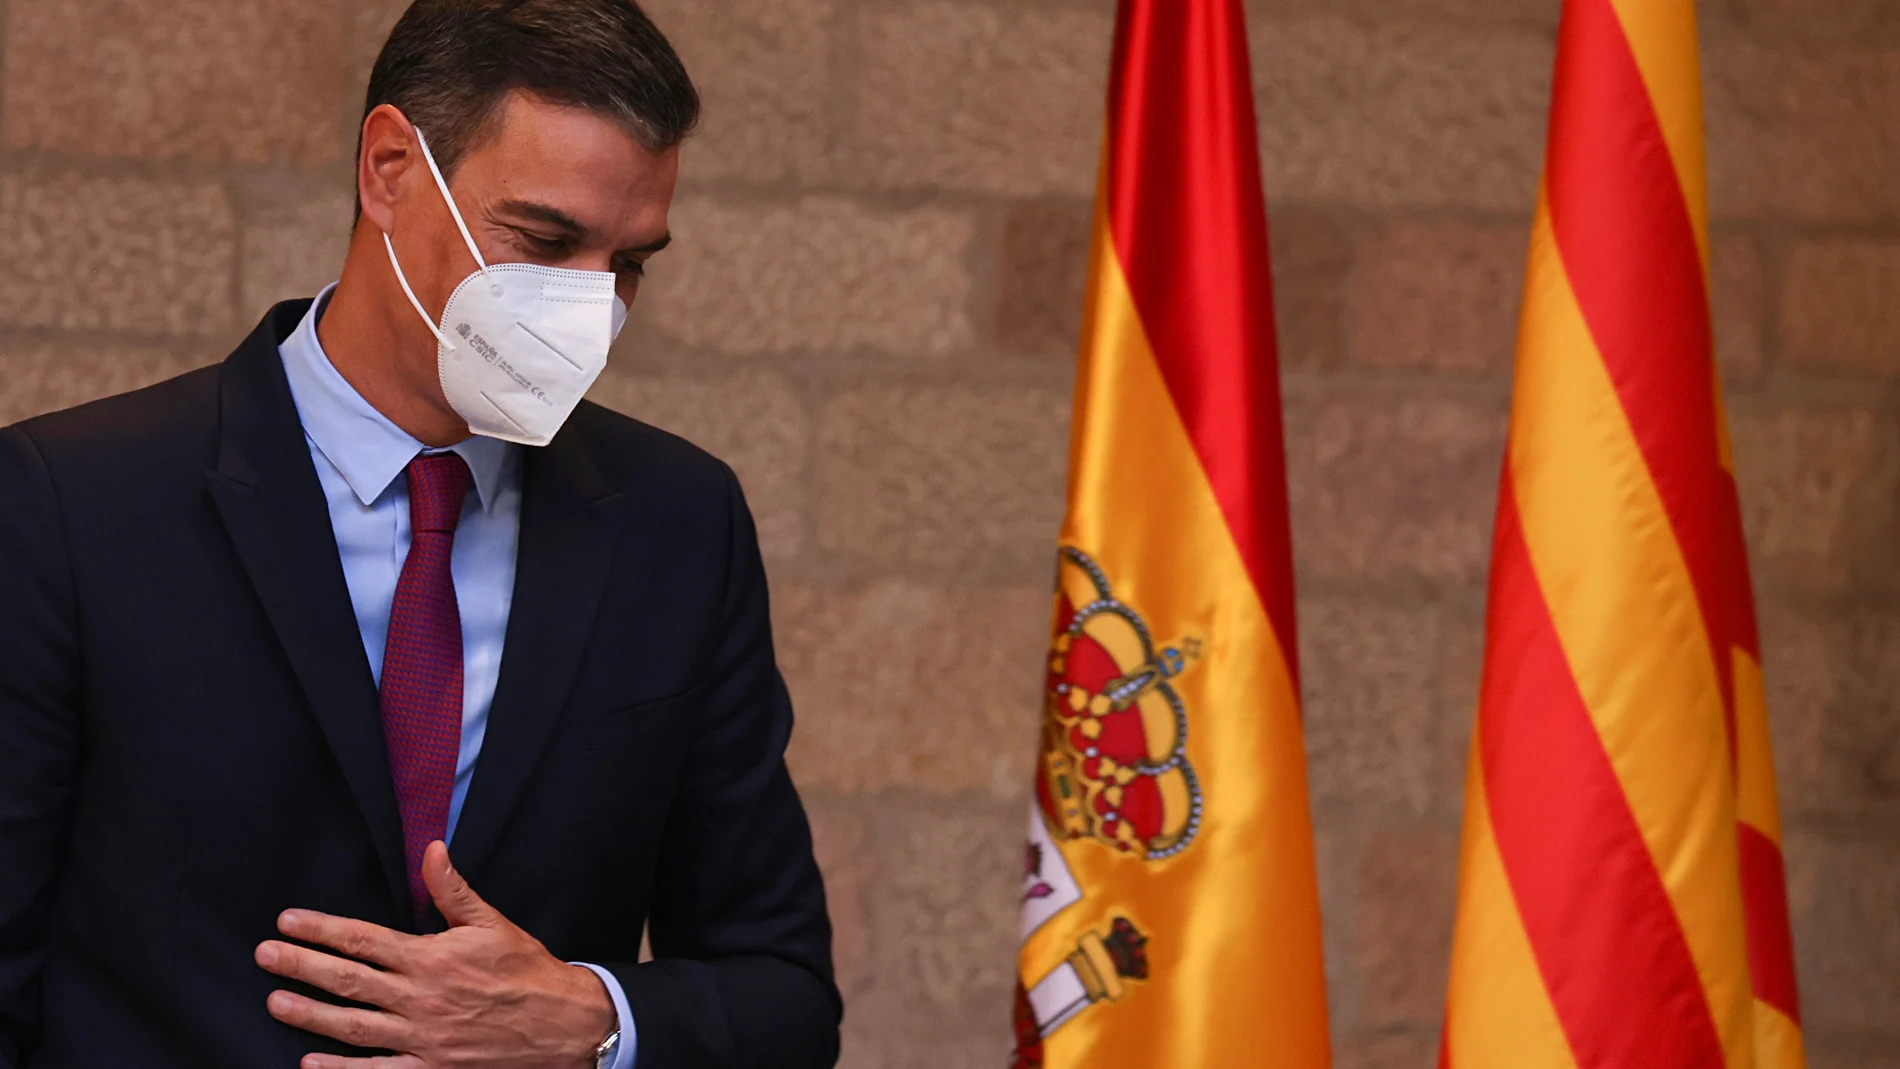 Spanish Prime Minister Pedro Sanchez leaves after attending a news conference at Palau de la Generalitat in Barcelona, Spain, September 15, 2021. REUTERS/Nacho Doce